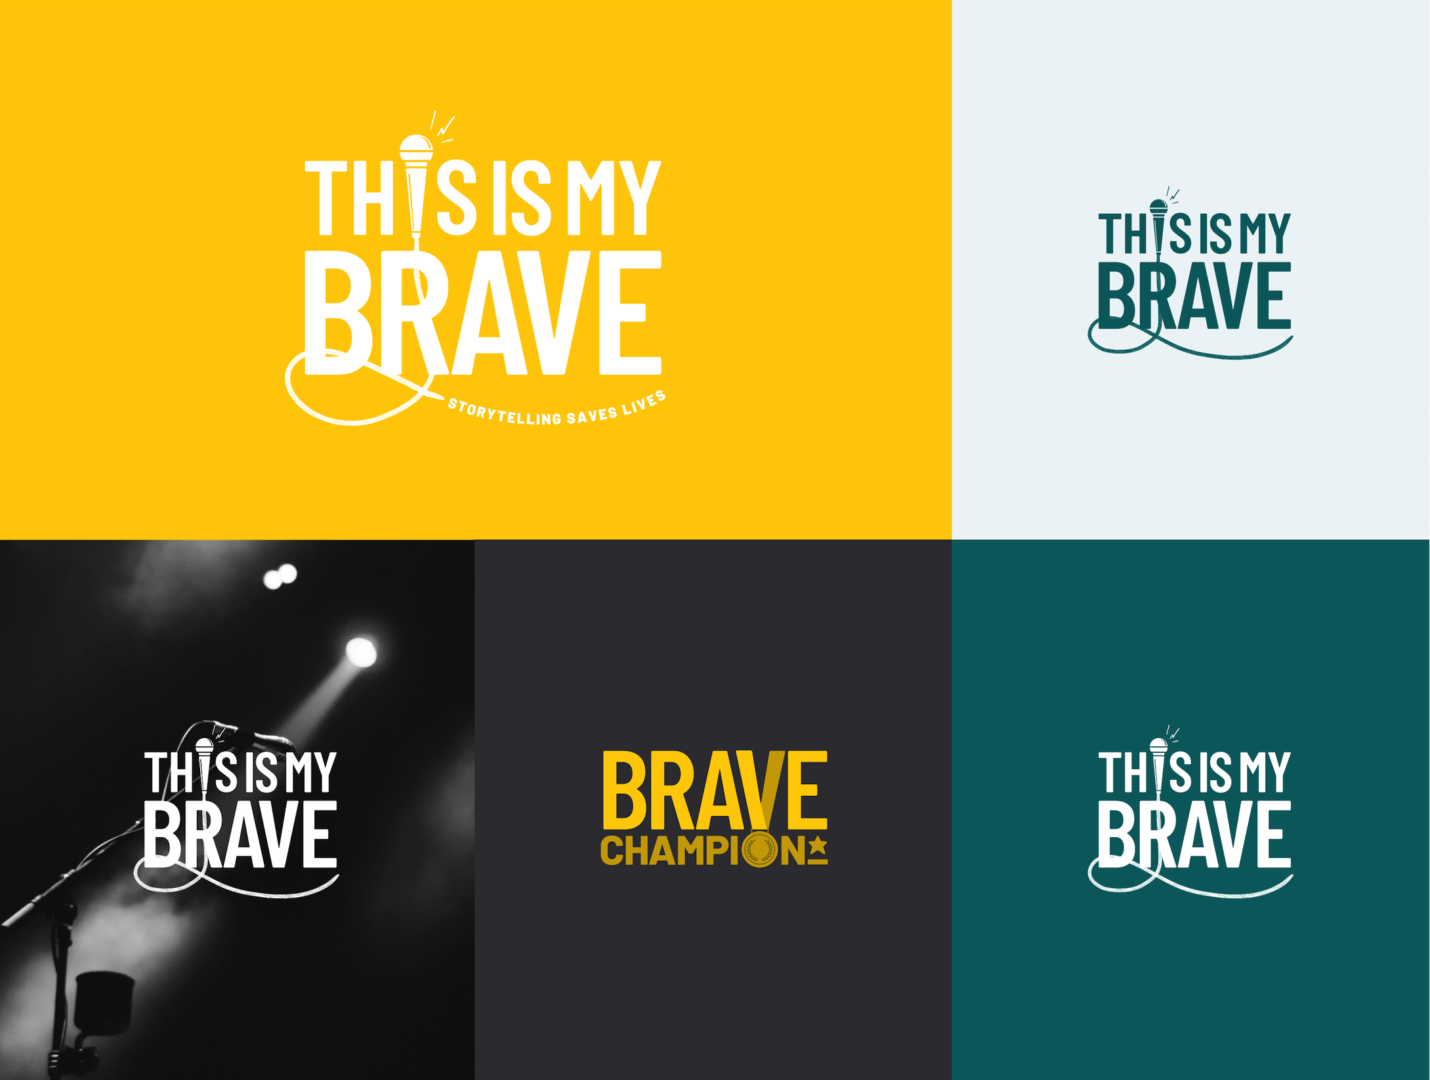 This is my brave logos plus brave champion logo